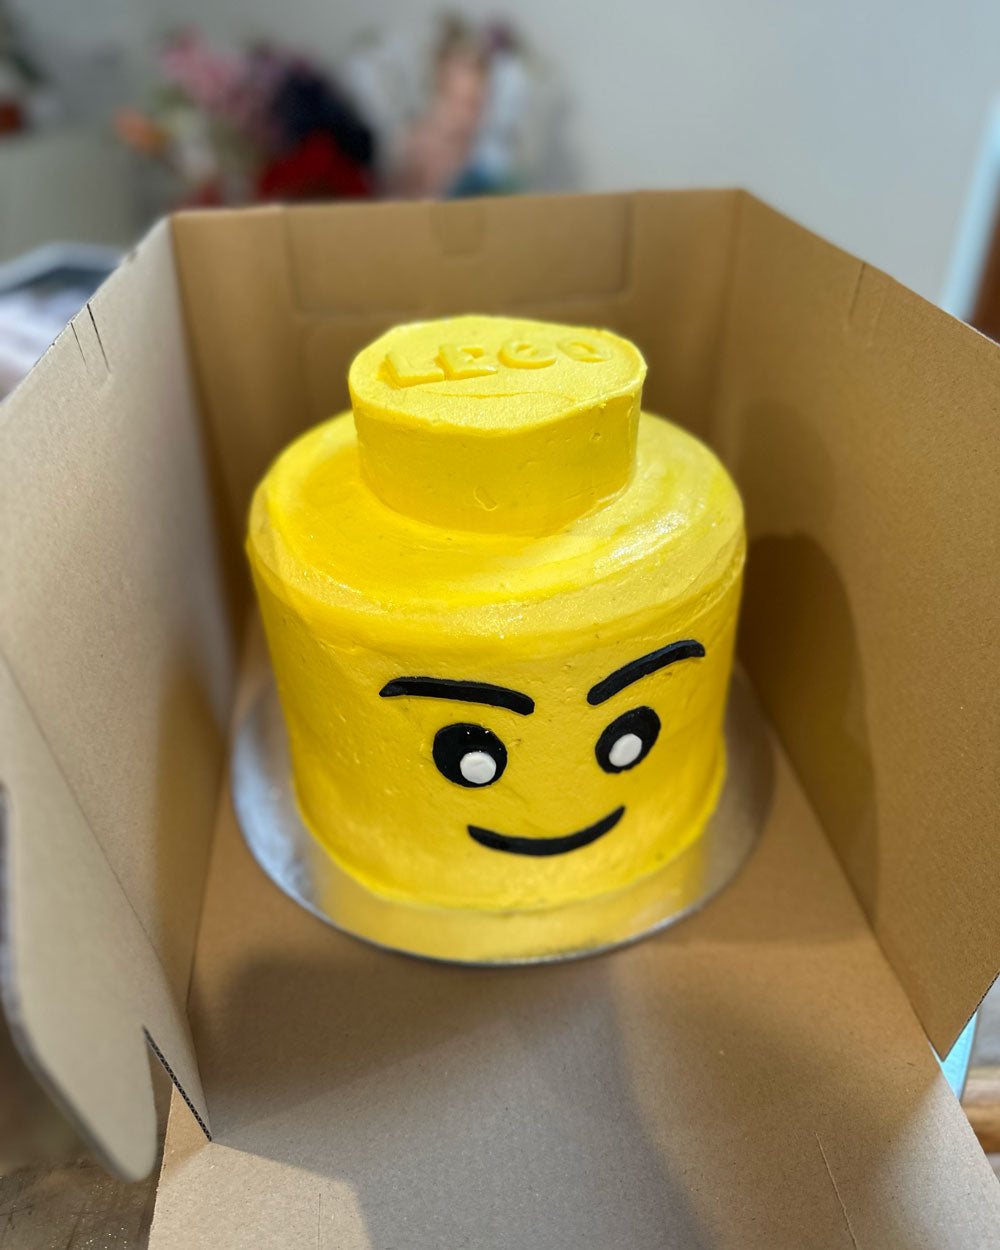 Lego Head Cake